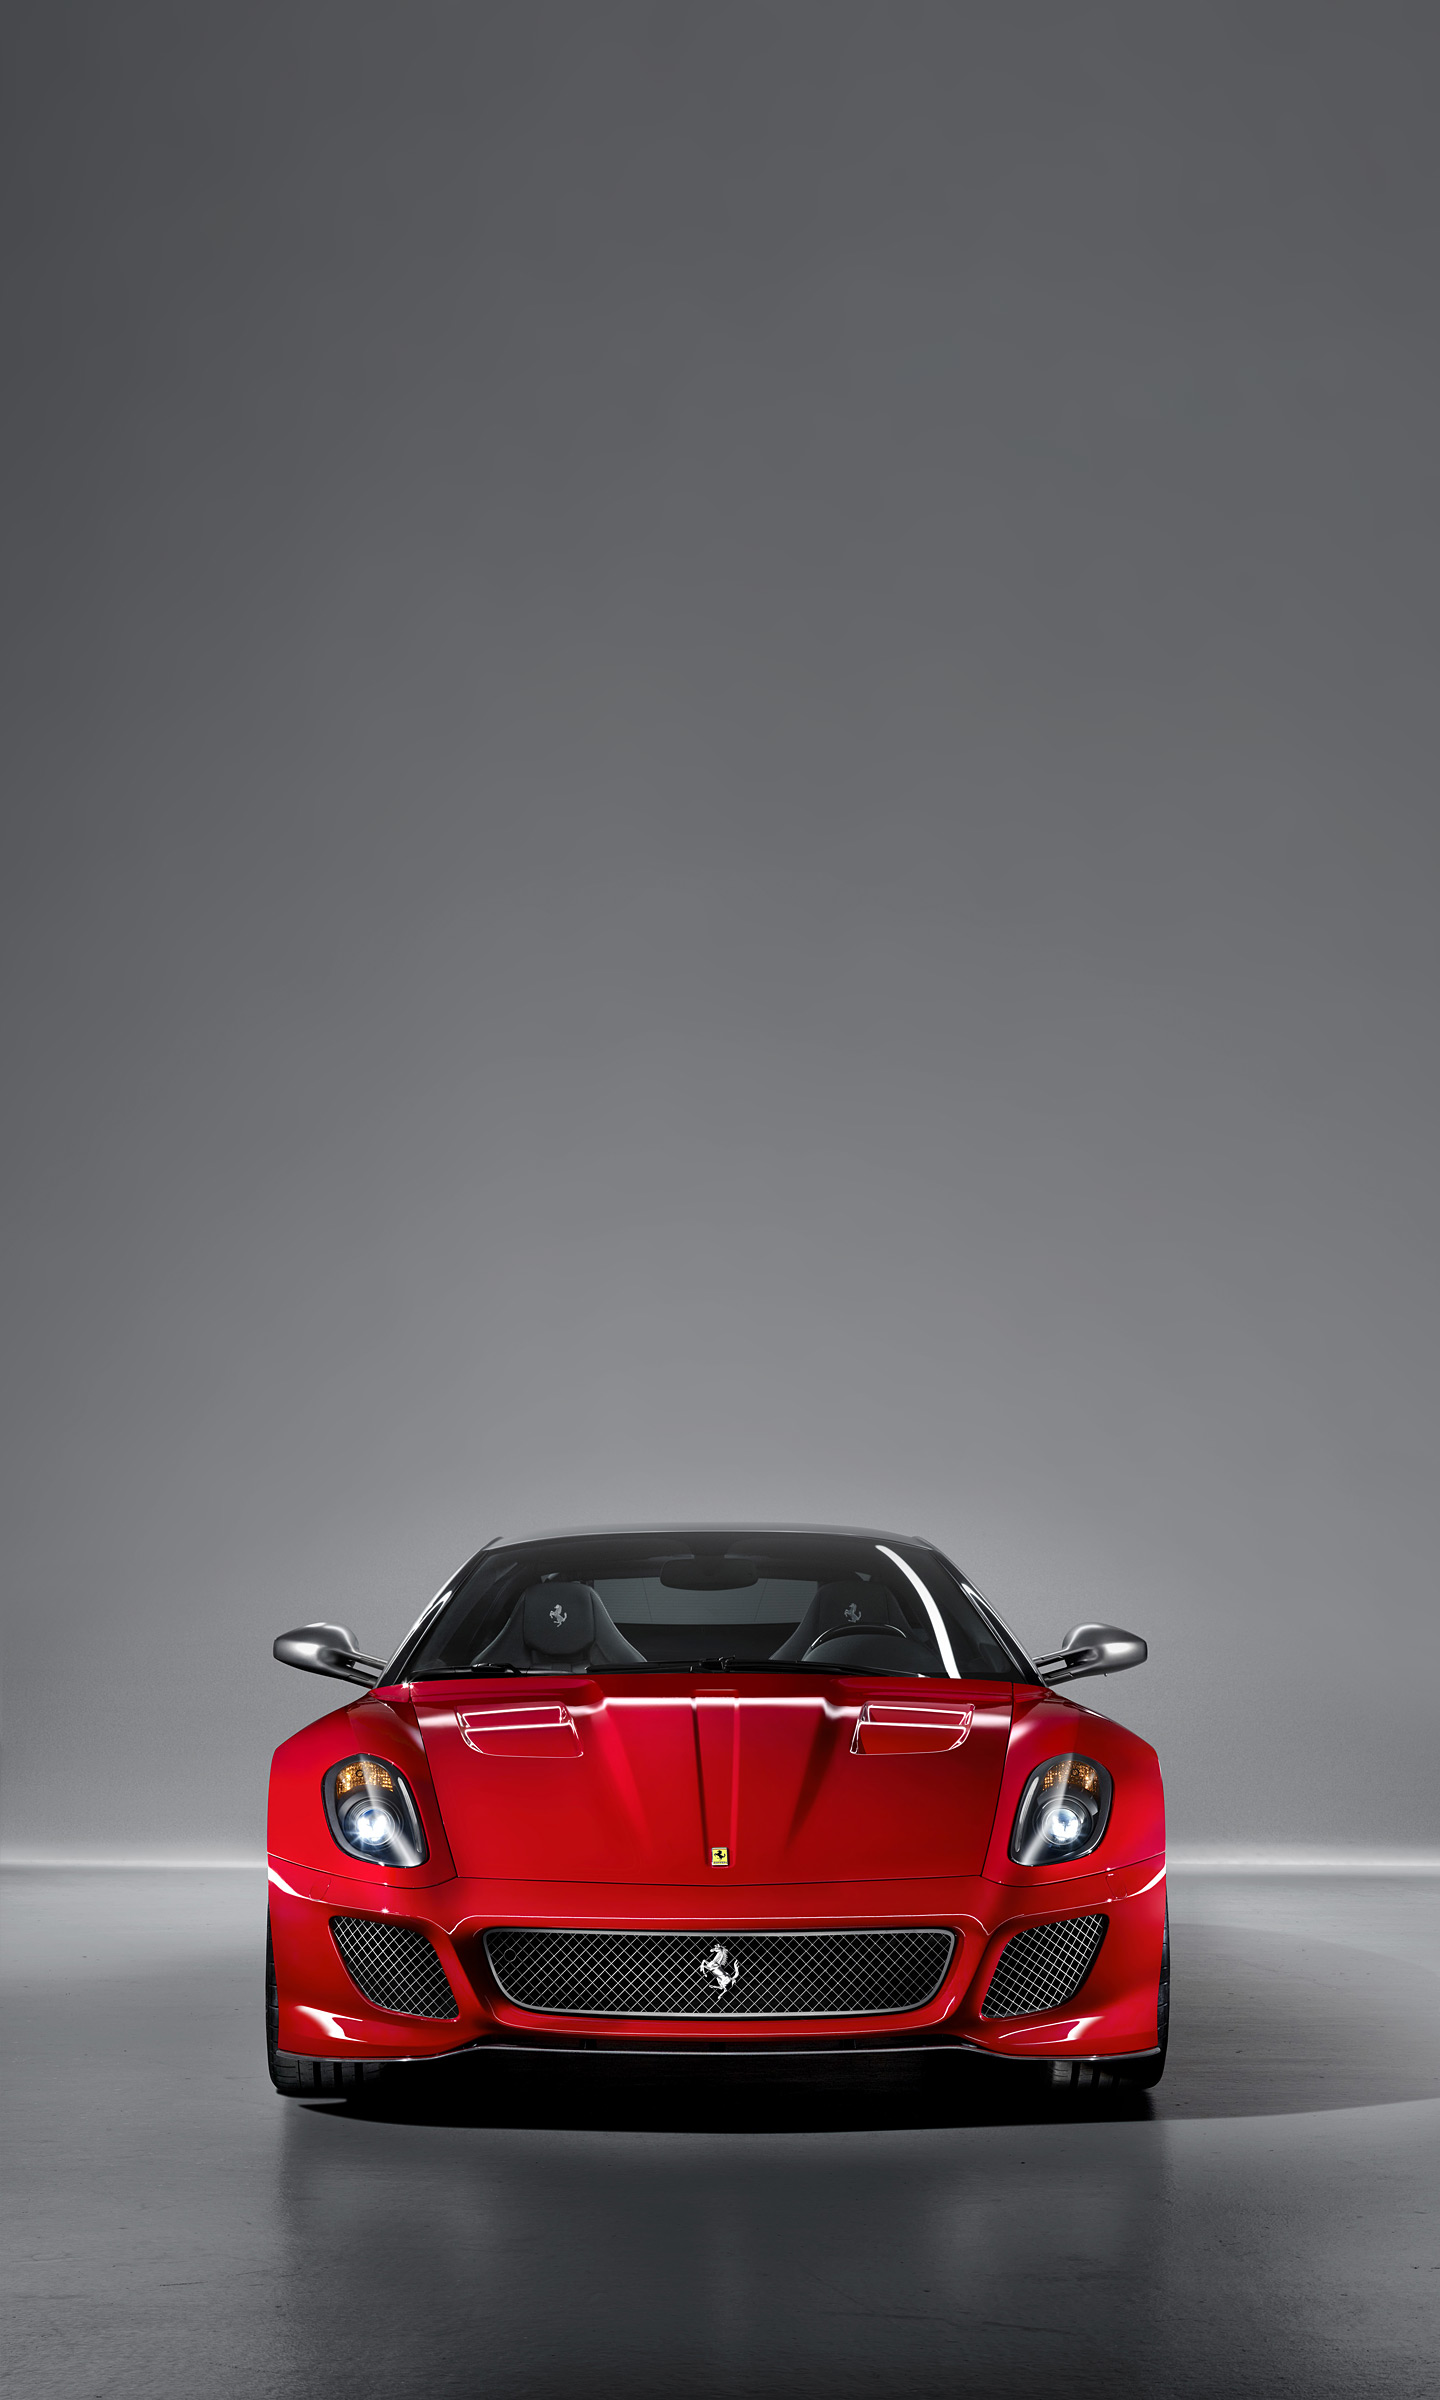  2010 Ferrari 599 GTO Wallpaper.